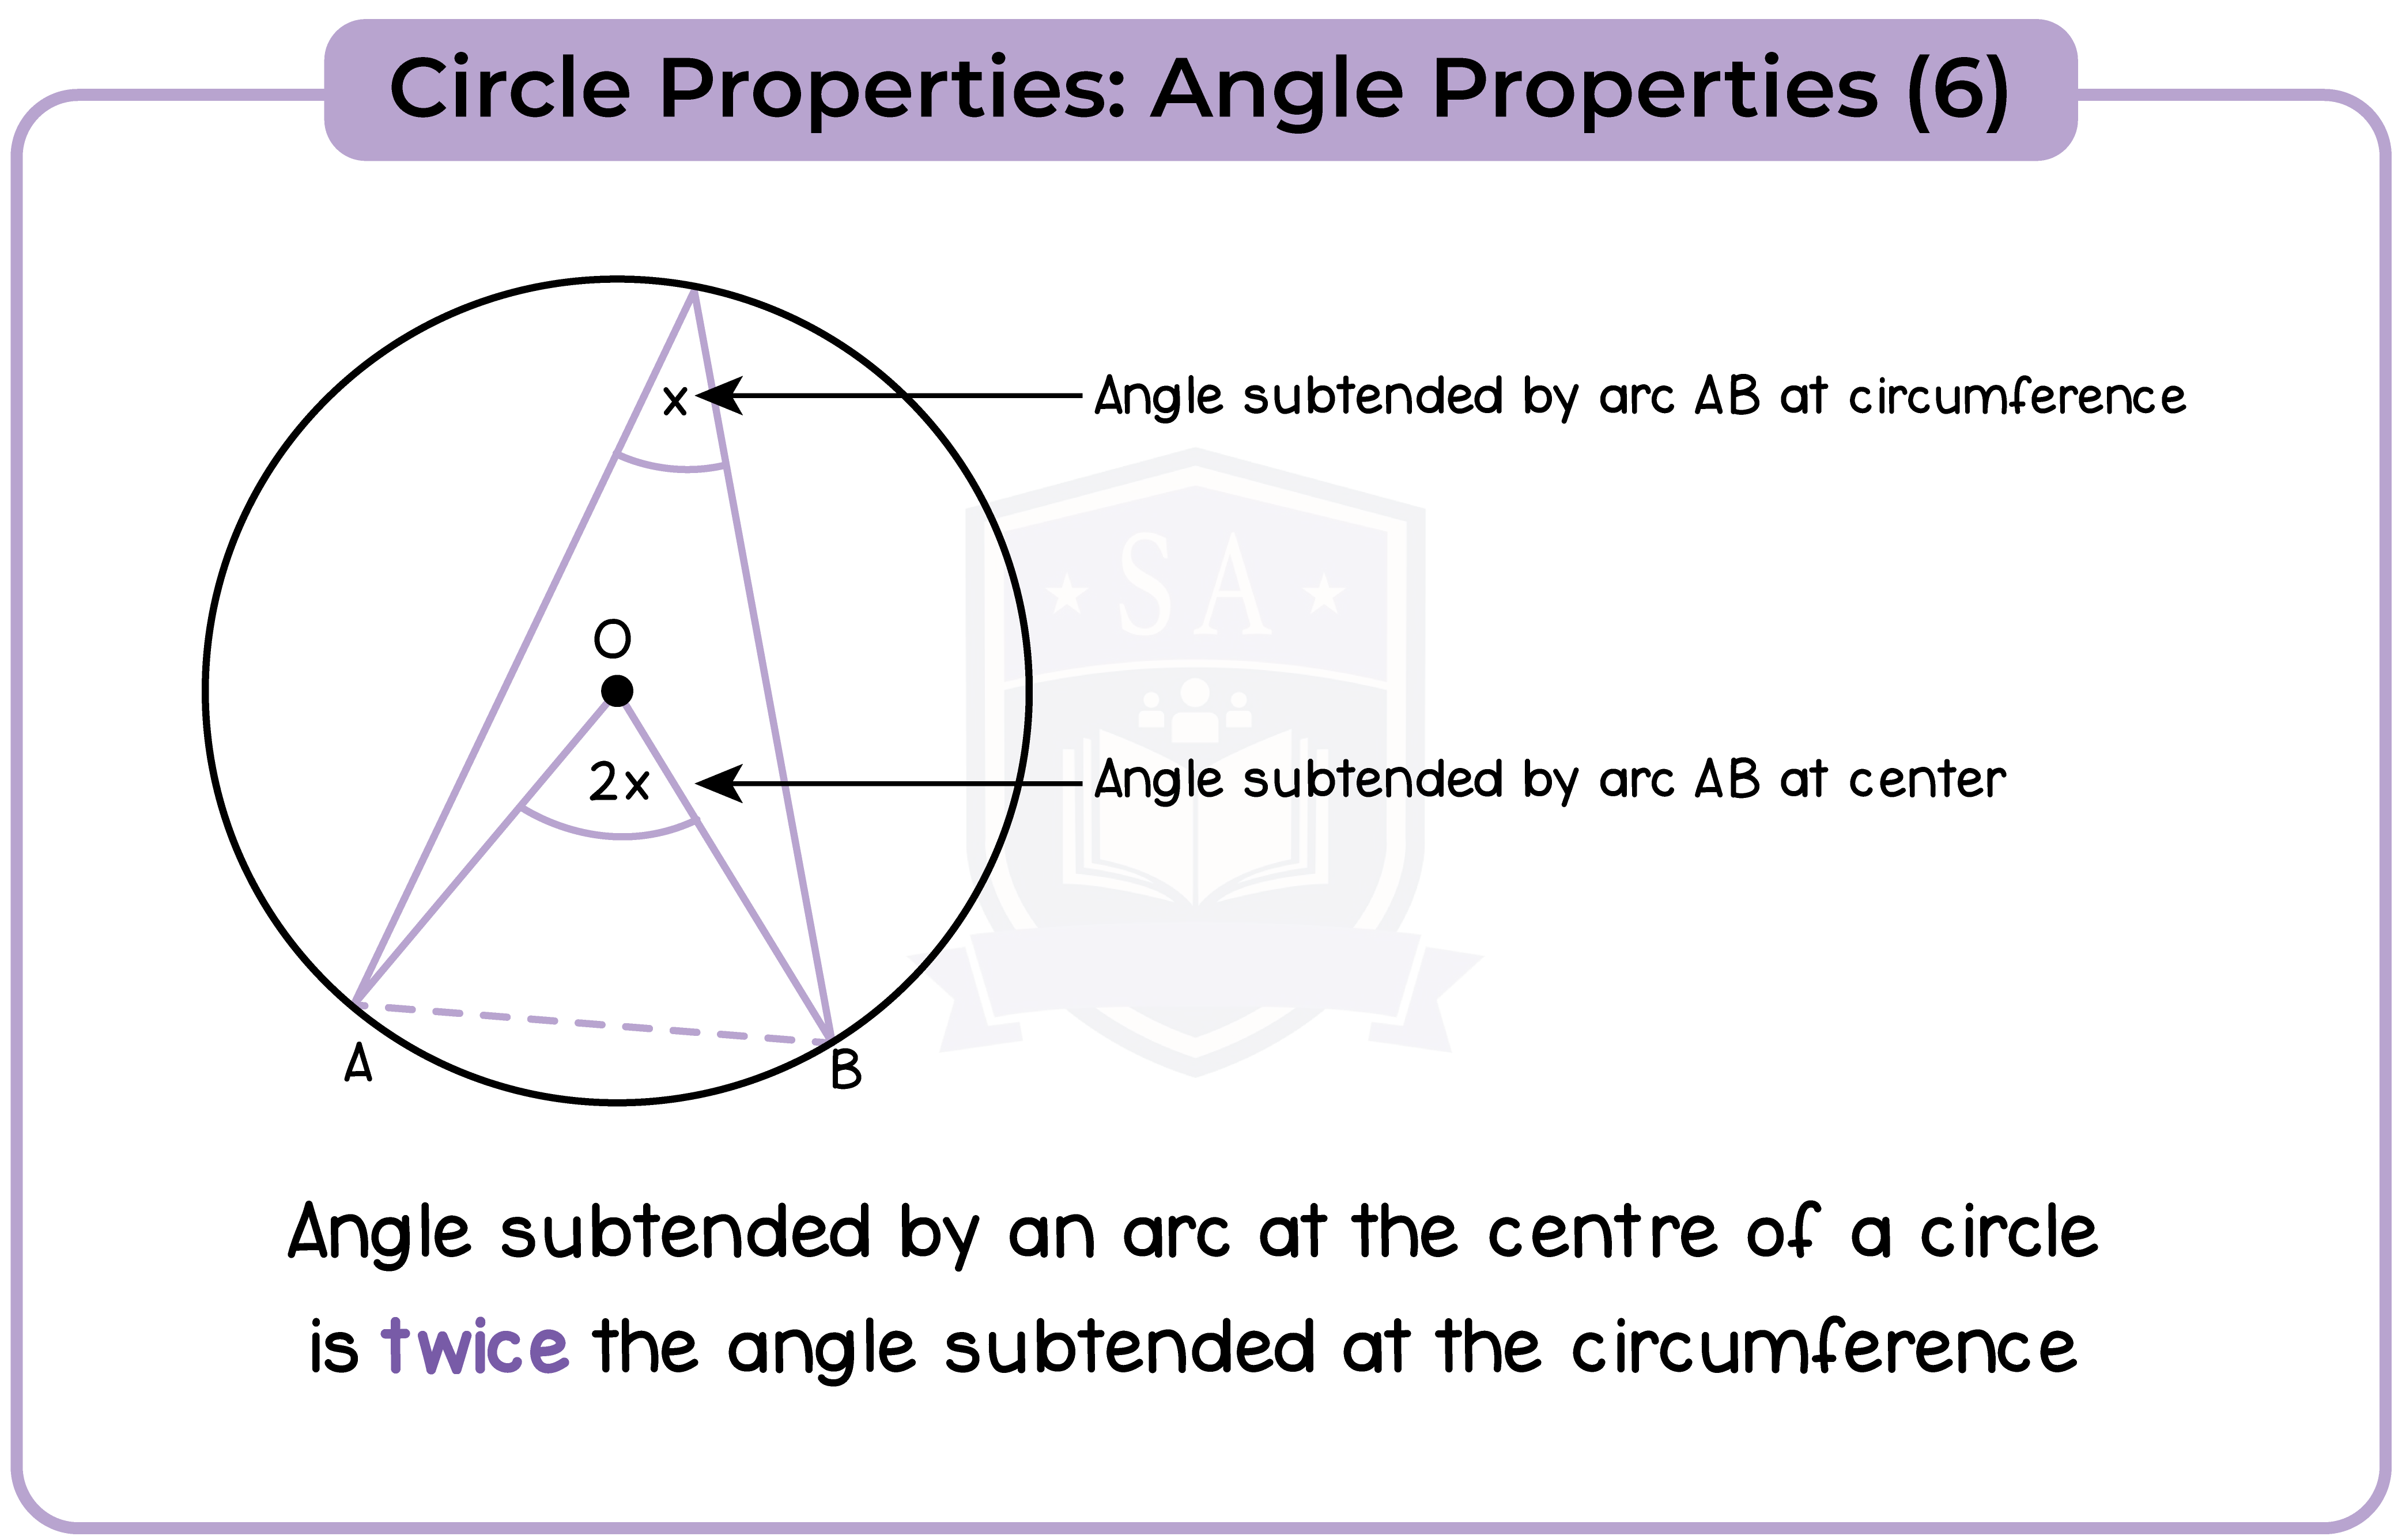 edexcel_igcse_mathematics a_topic 30_circle properties_010_Circle Properties: Angle Properties (6)